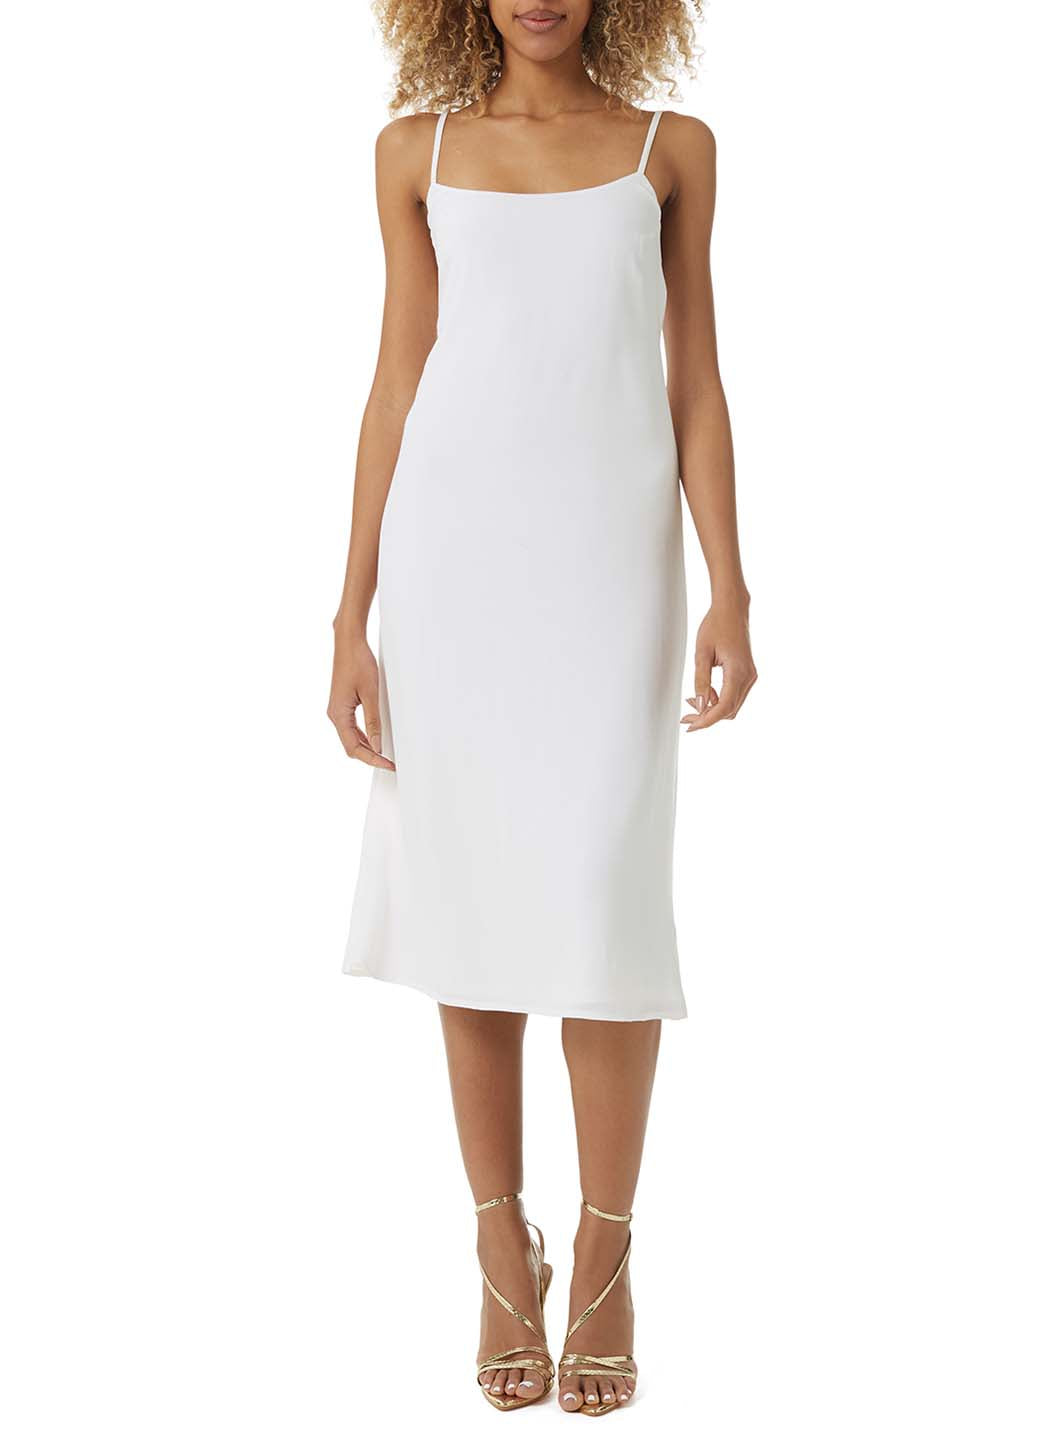 Primrose White Crepe Dress Front